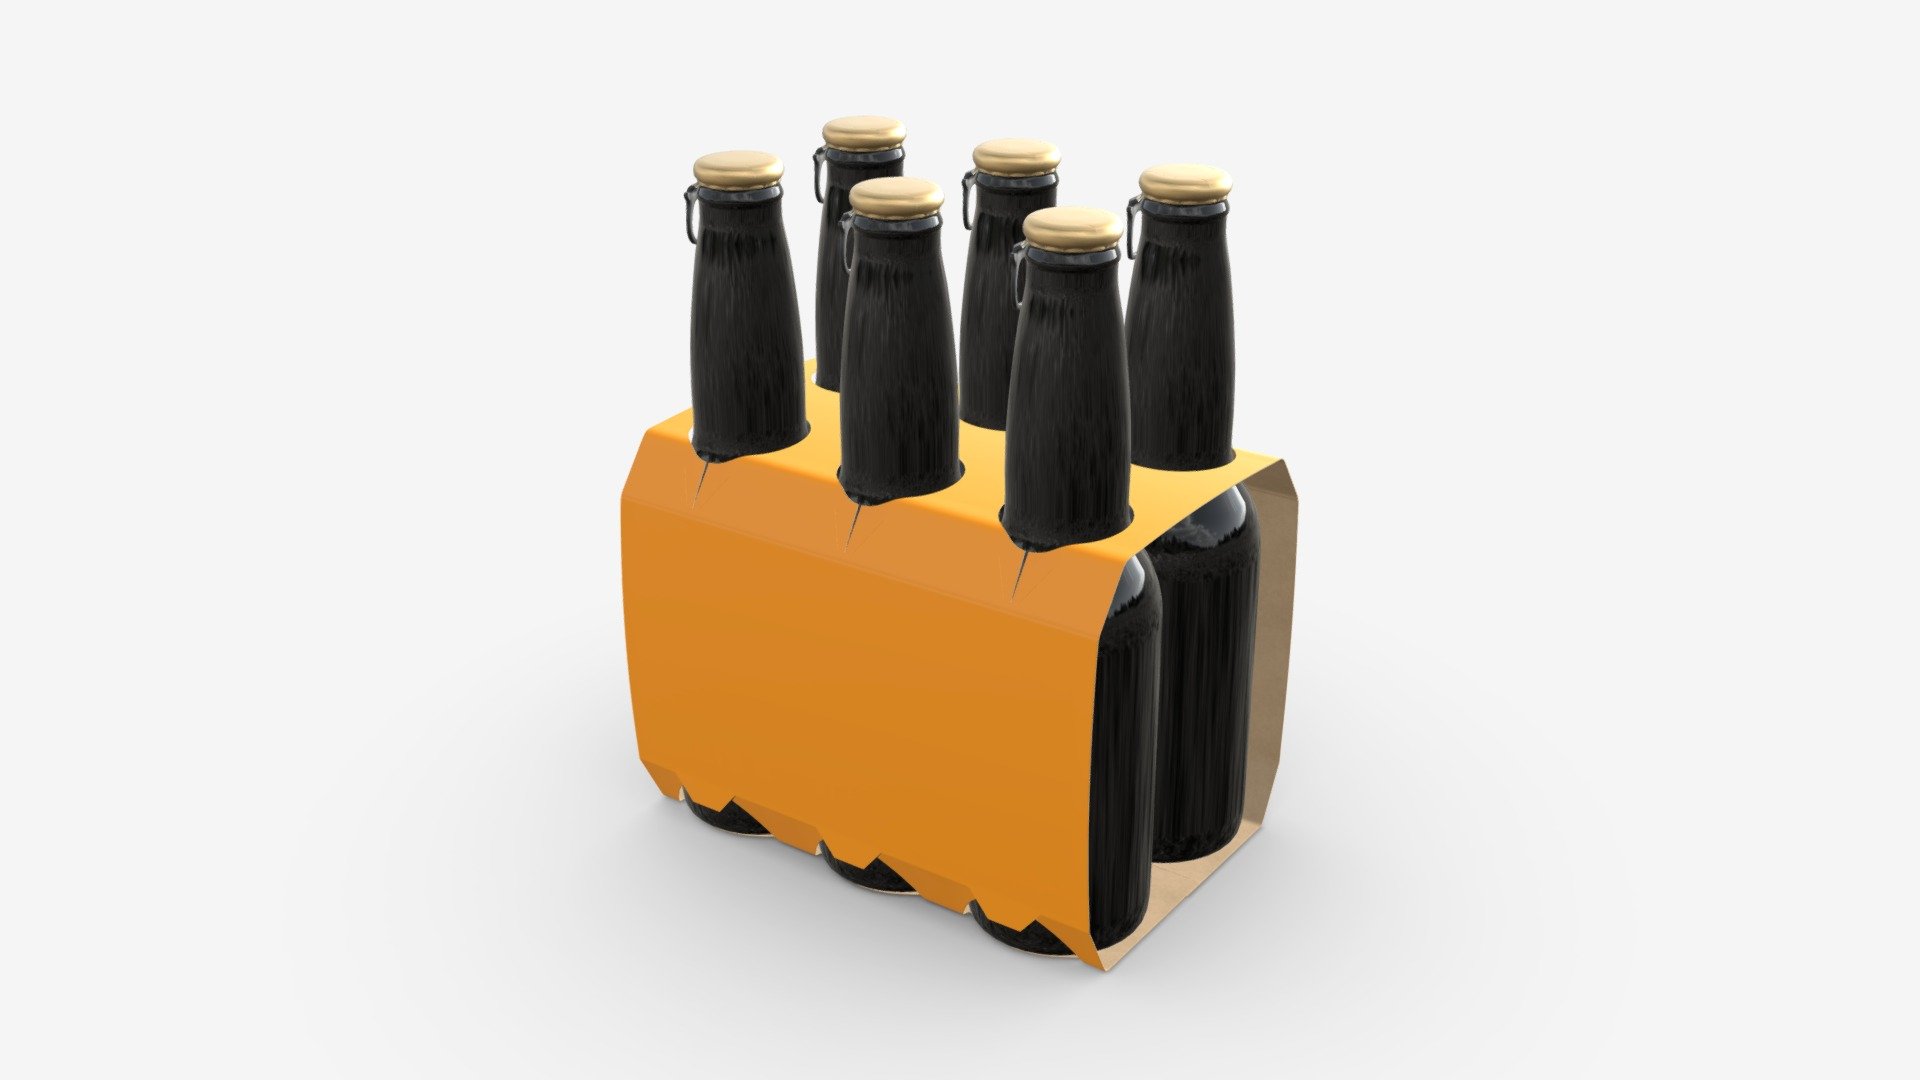 Beer bottle cardboard carrier 01 - Buy Royalty Free 3D model by HQ3DMOD (@AivisAstics) 3d model